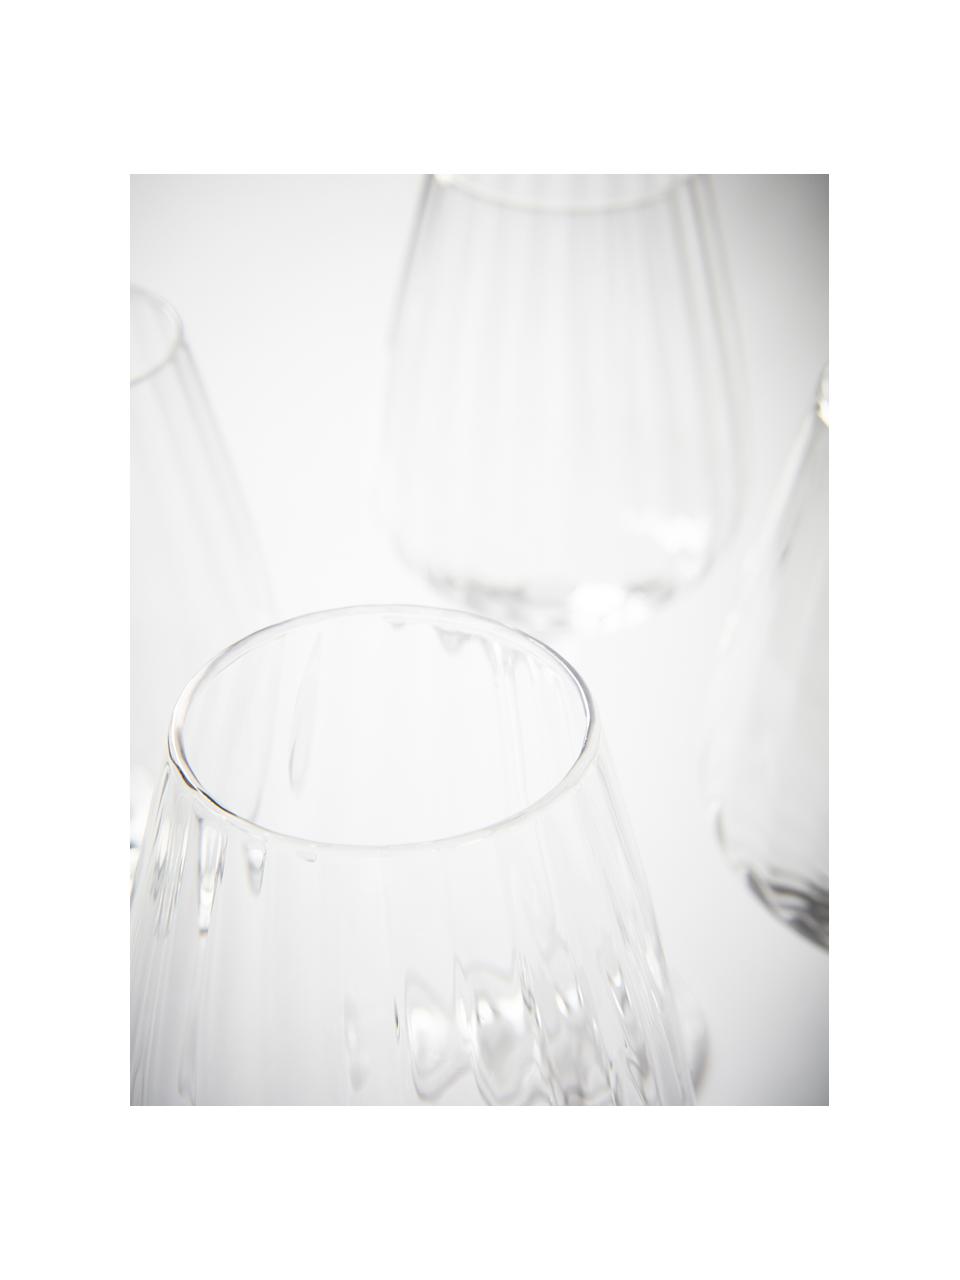 Bicchiere vino bianco con struttura scanalata Akia 4 pz, Vetro, Trasparente, Ø 8 x Alt. 24 cm